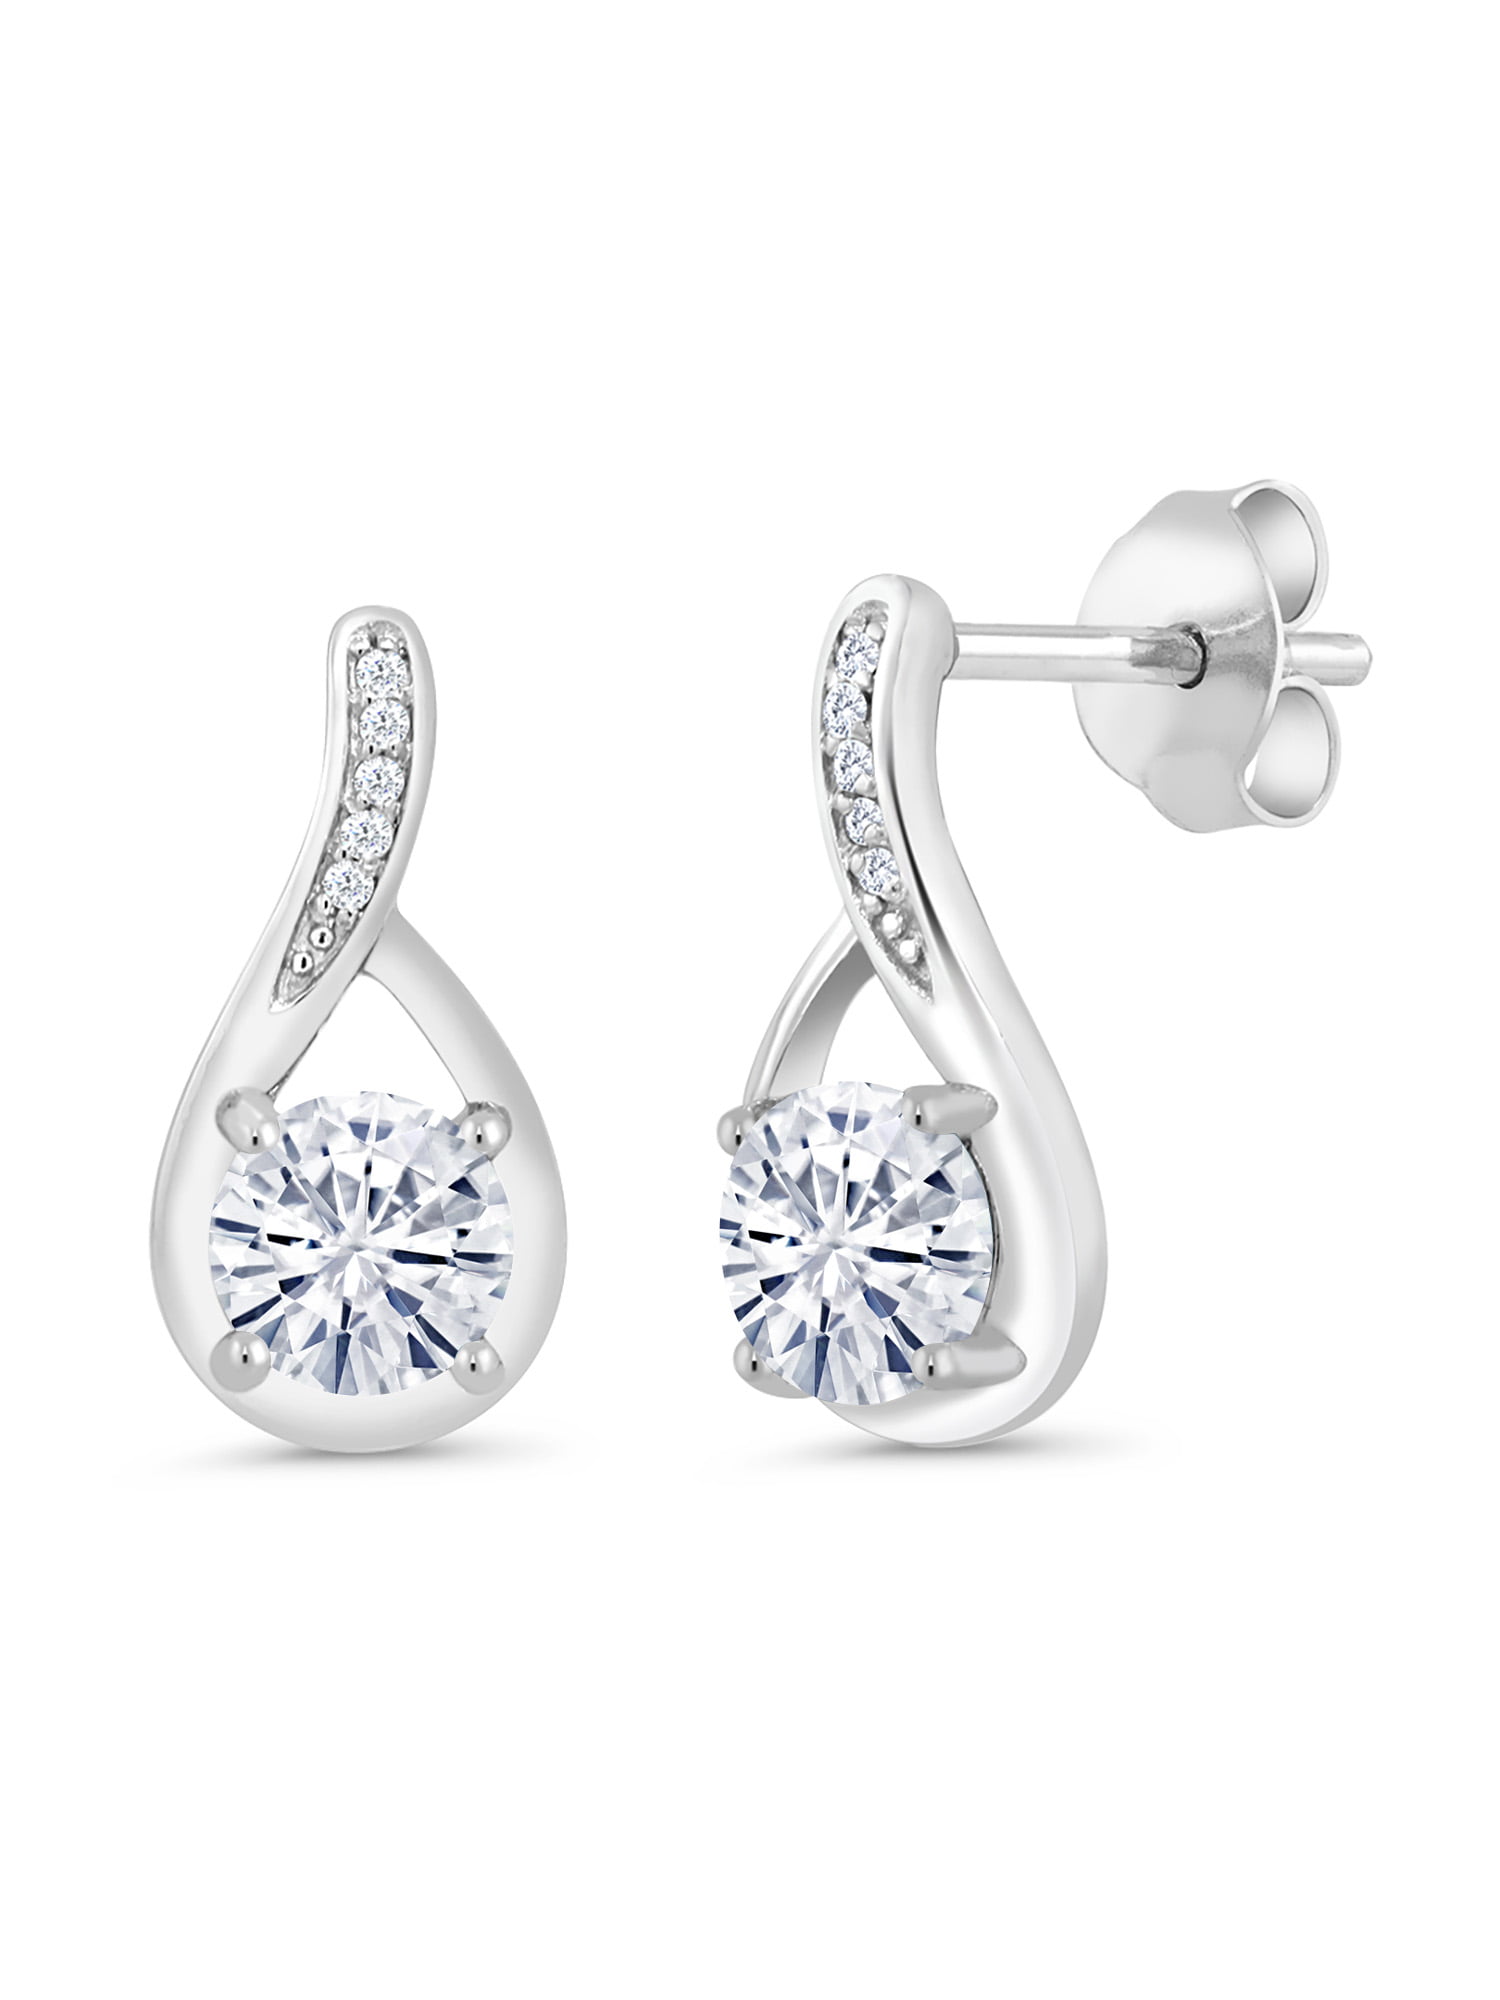 Details about   .925 Sterling Silver 20 MM Children's Enameled Princess Dangle Stud Earrings 